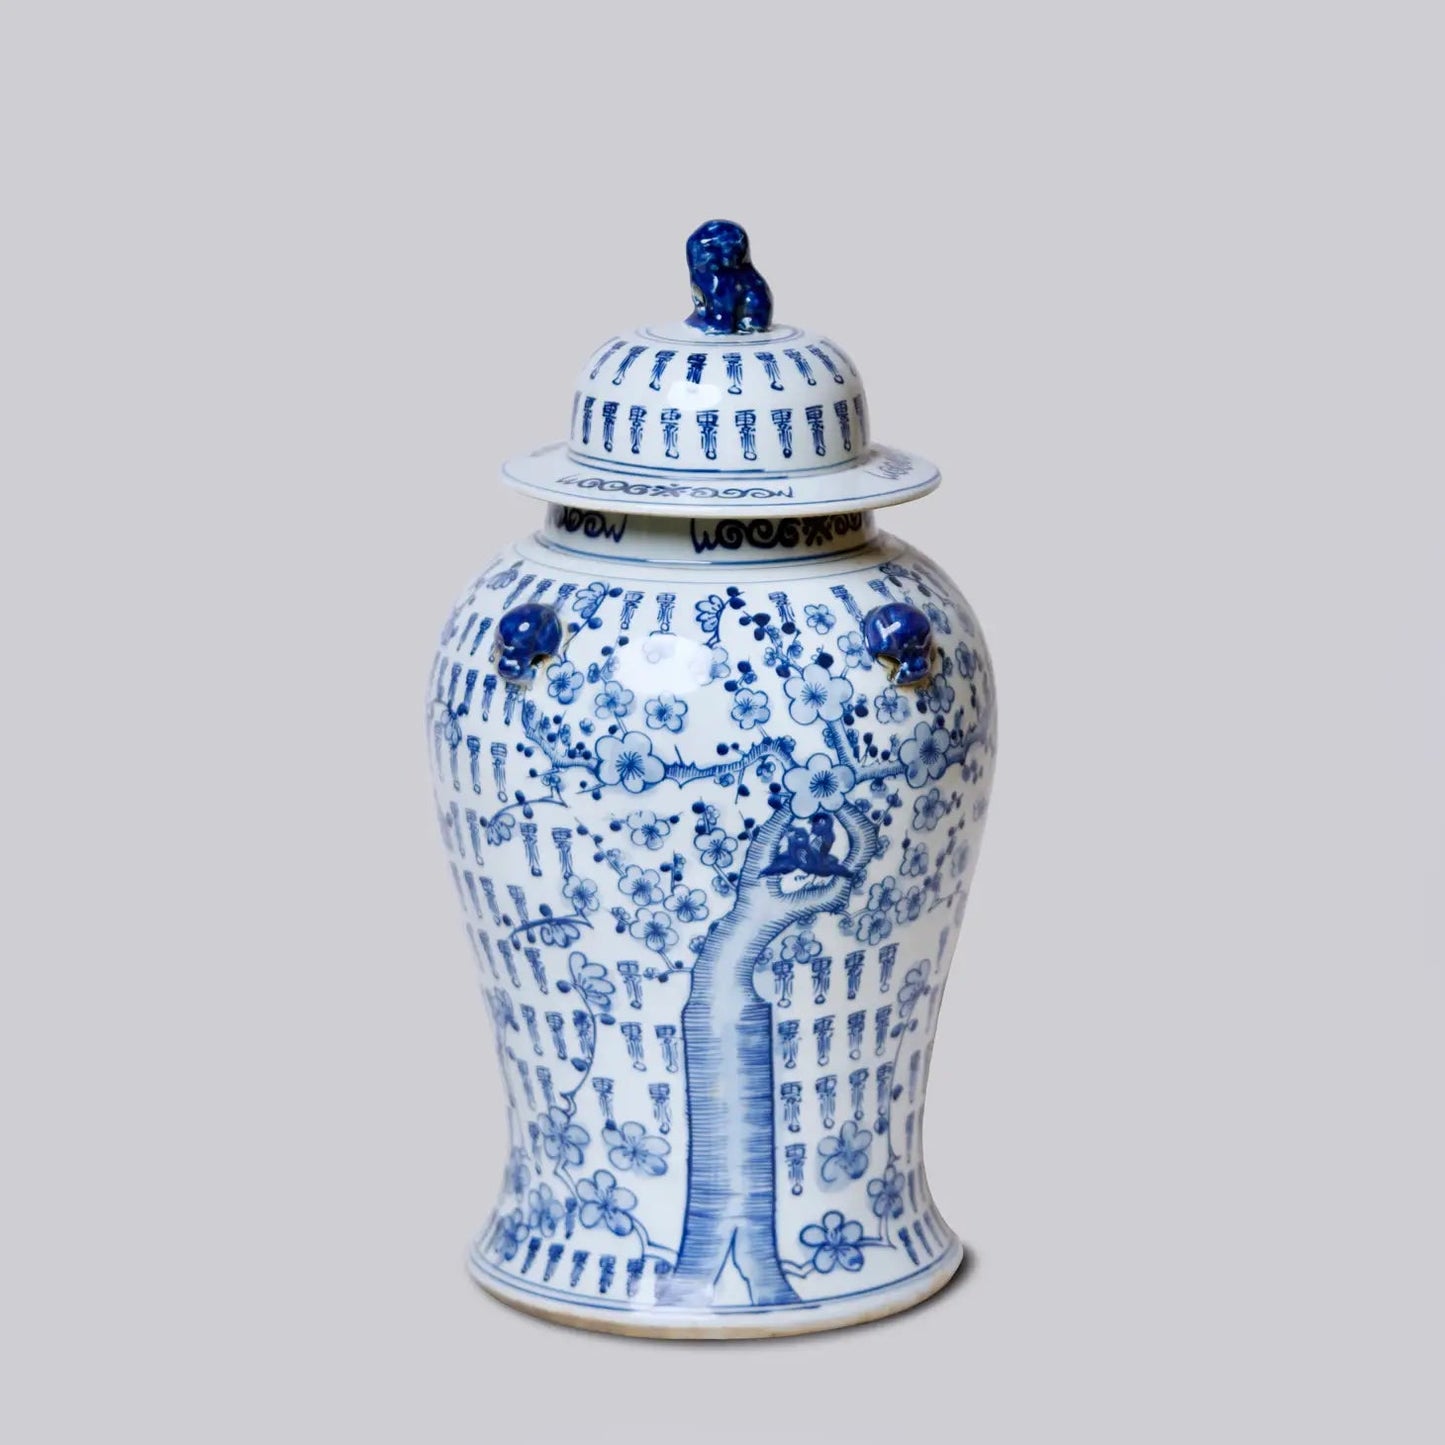 Longevity Plum Lidded Blue and White Porcelain Temple Jar